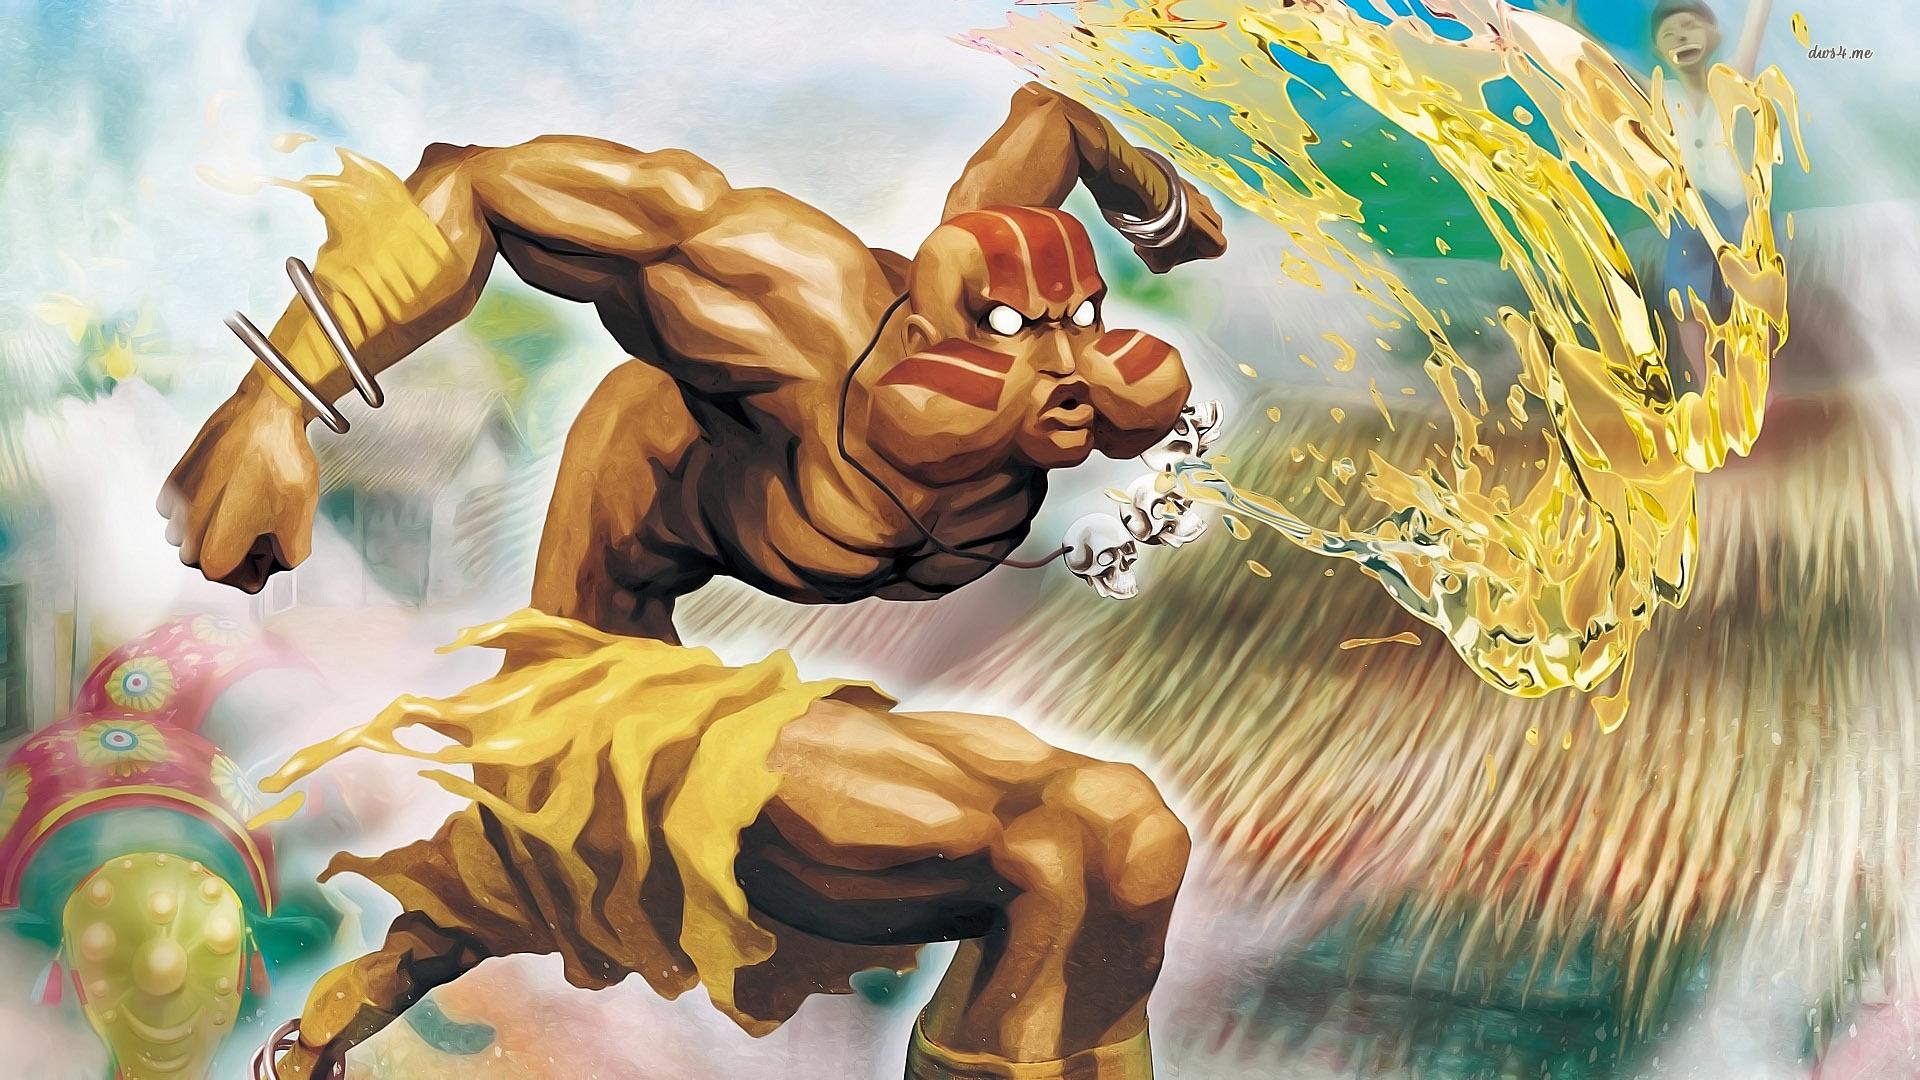 Dhalsim in Super Street Fighter II: The New Challengers wallpaper